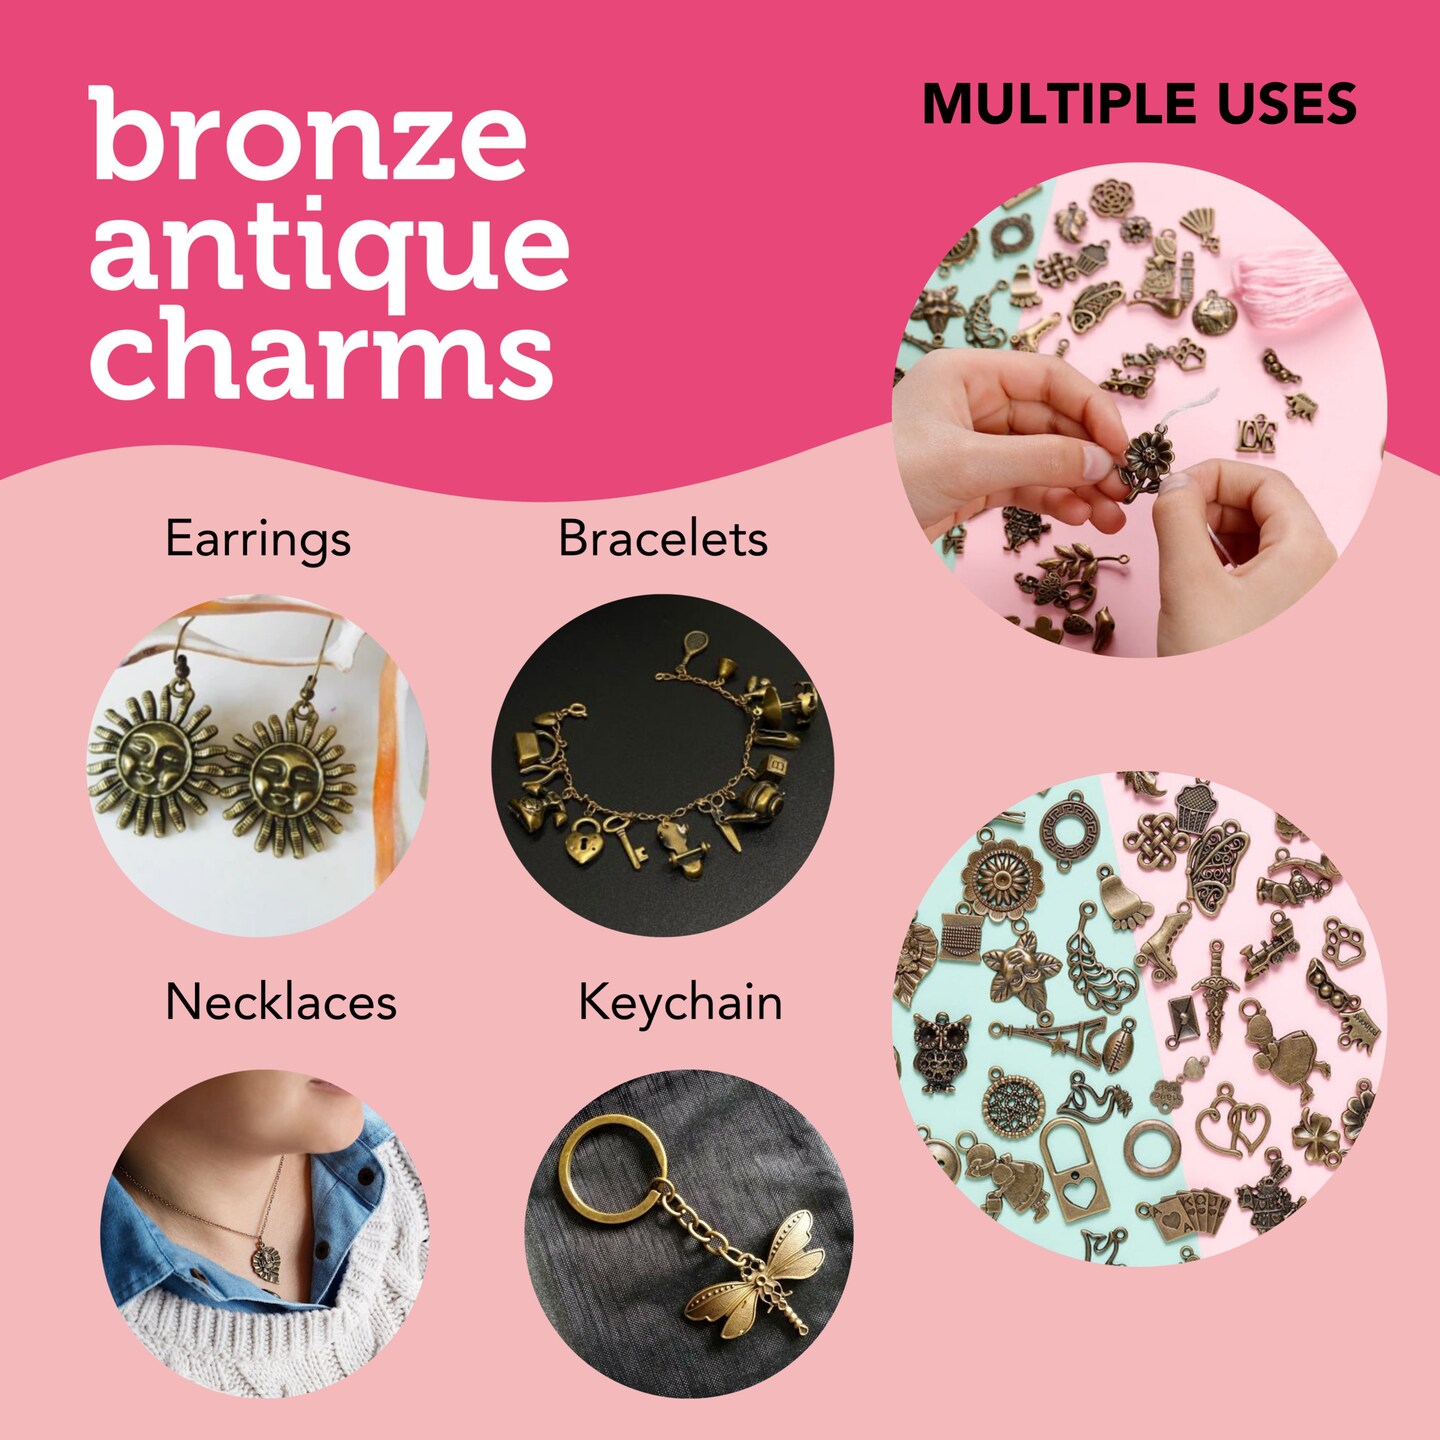 Incraftables 166pcs Bronze Charms Set for Jewelry Making. Bulk DIY Necklace, Bracelet, Bangle &#x26; Keychain Making Kit w/ 120pcs Antique Charms (Small &#x26; Large), 20pcs Word Charms &#x26; 26pcs A-Z Letter Charm